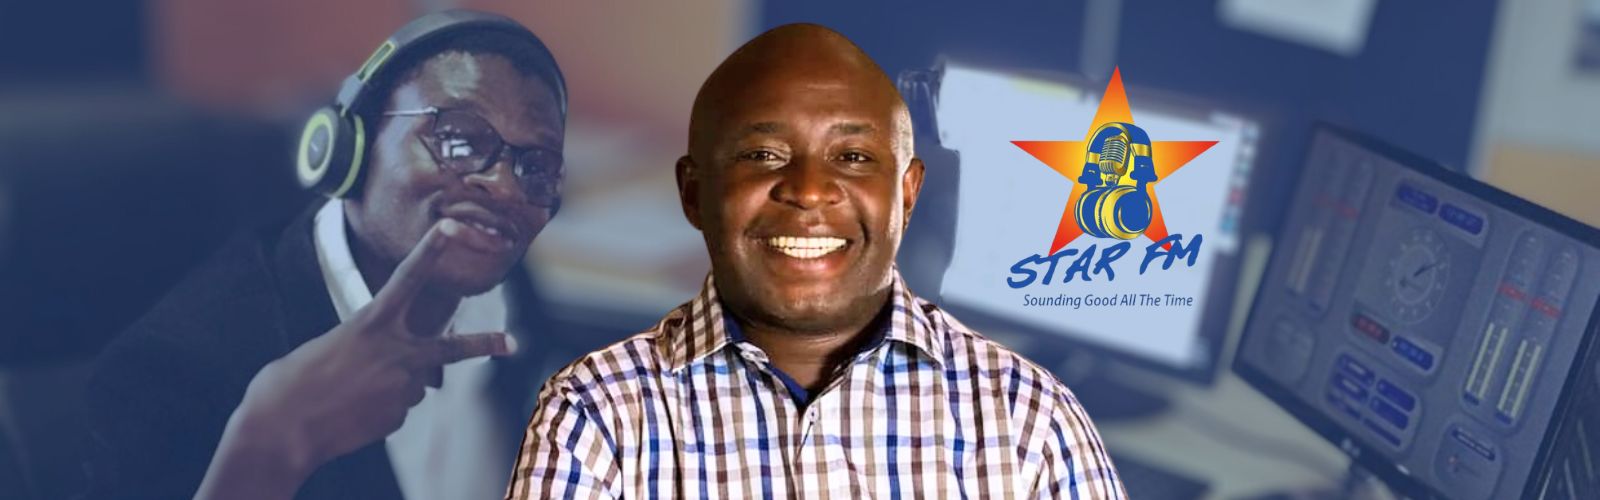 Babongile takes over Star FM’s primetime slot